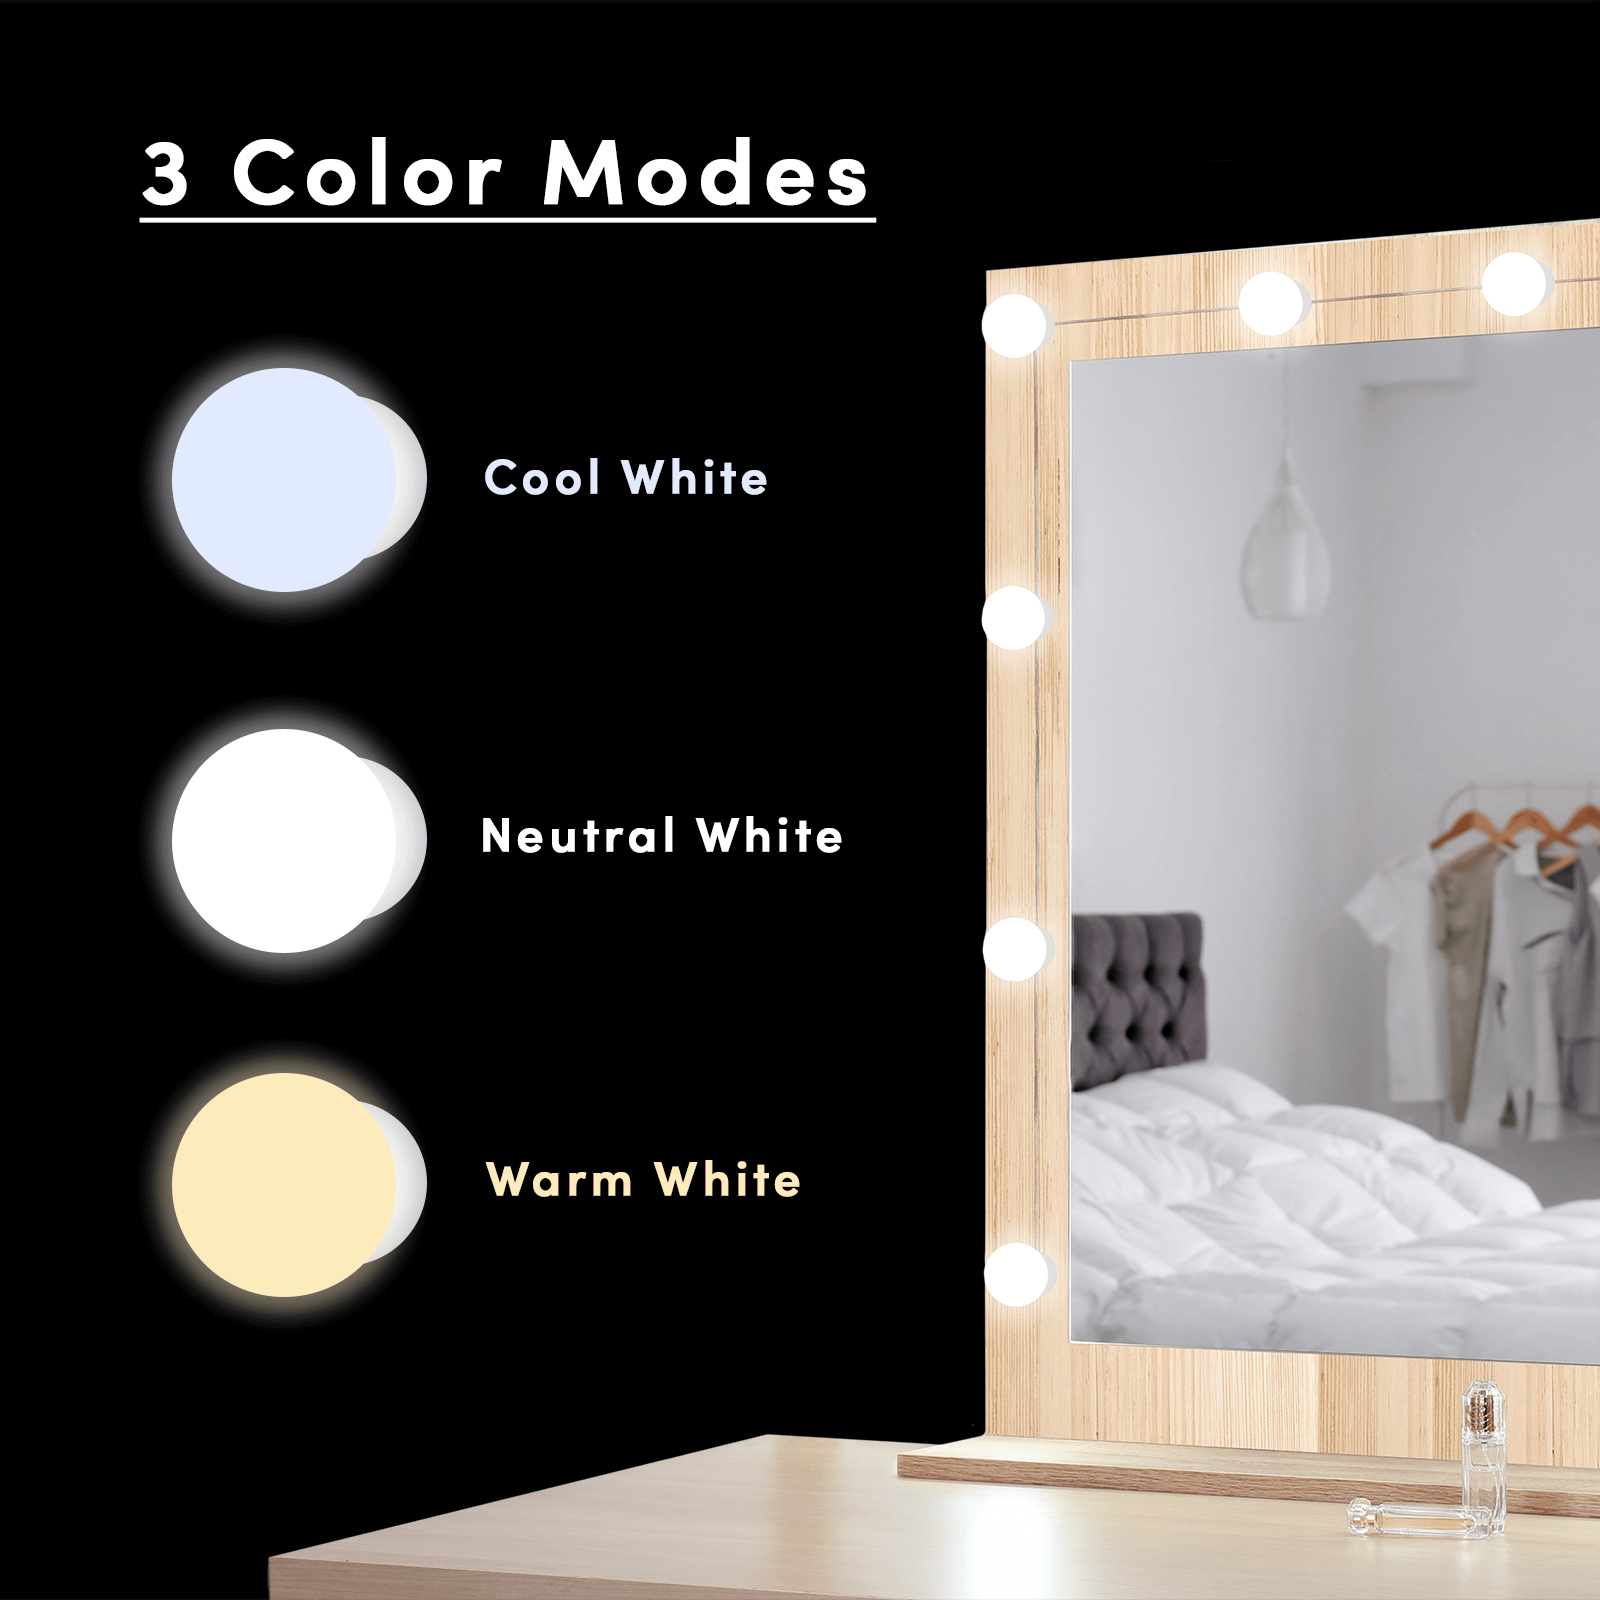 3 Color Modes. Cool white, neutral white, warm white. color::White